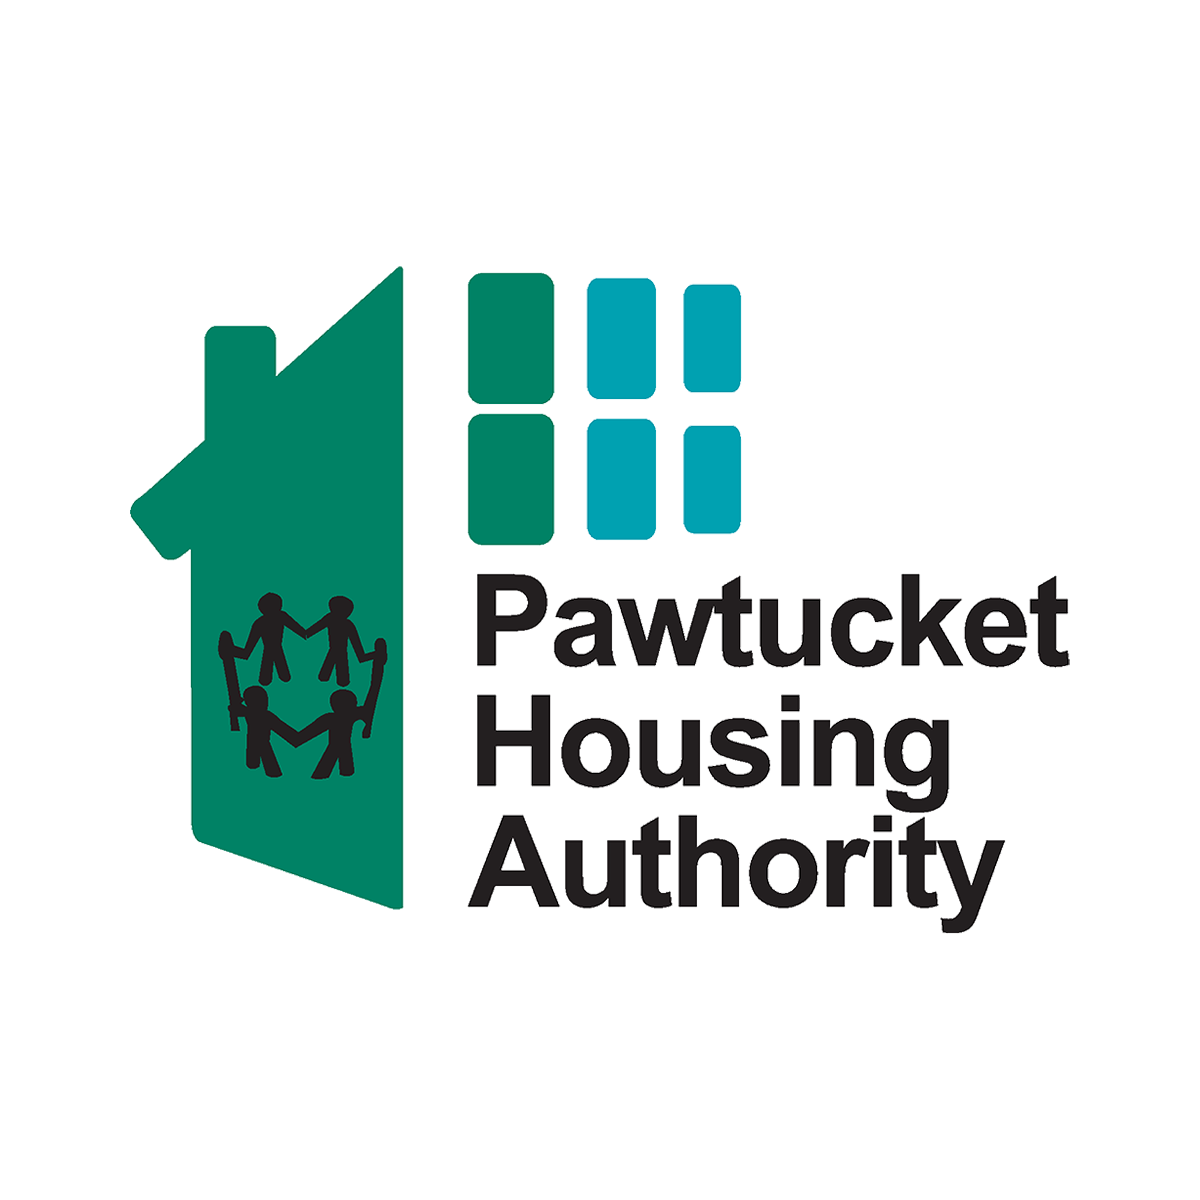 Pawtucket Housing Authority